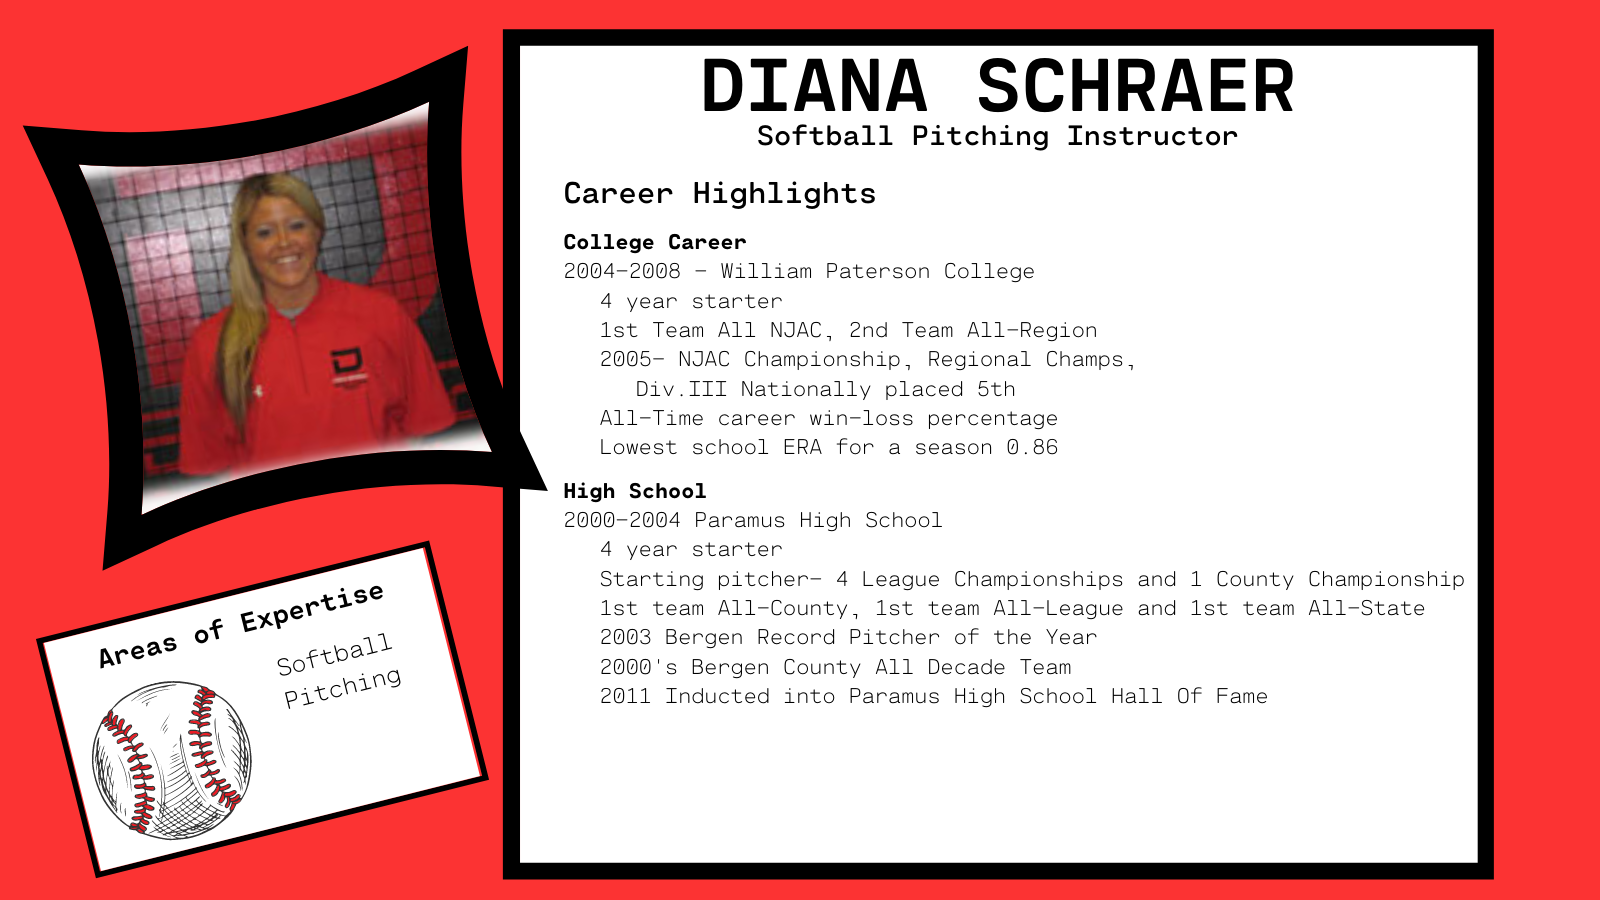 Diana Schraer